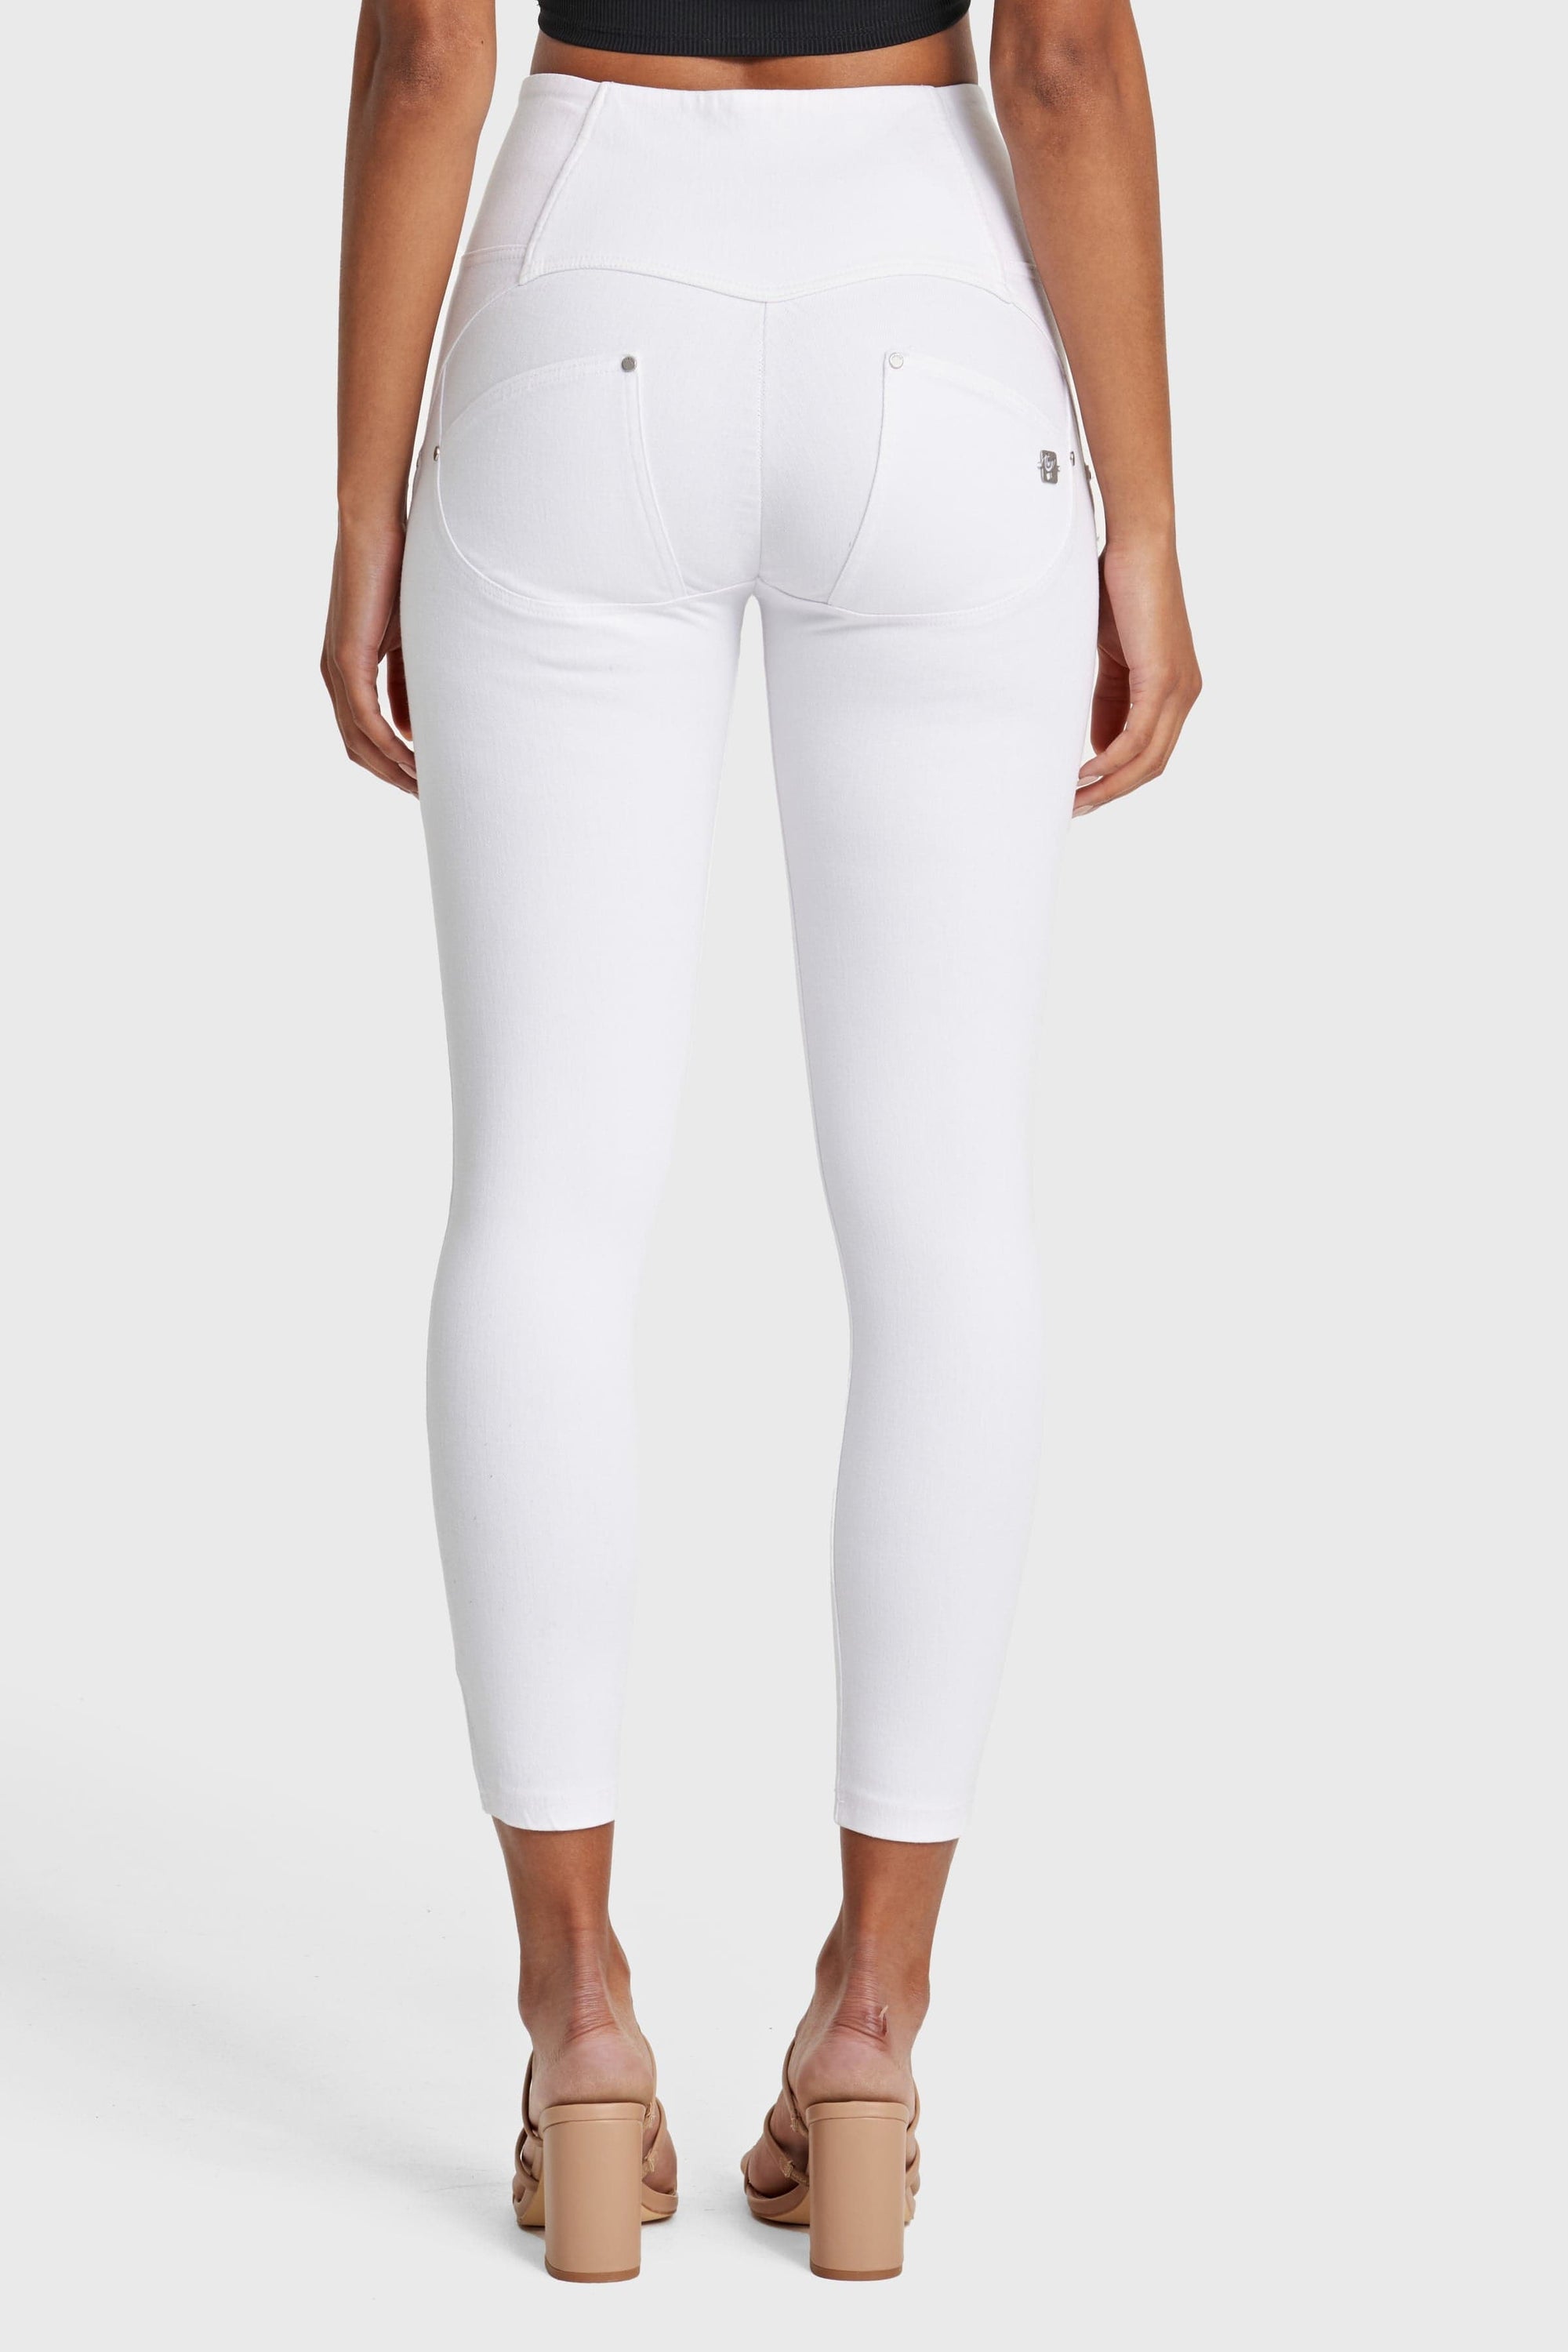 WR.UP® Snug Distressed Jeans - High Waisted - Petite Length - White 7